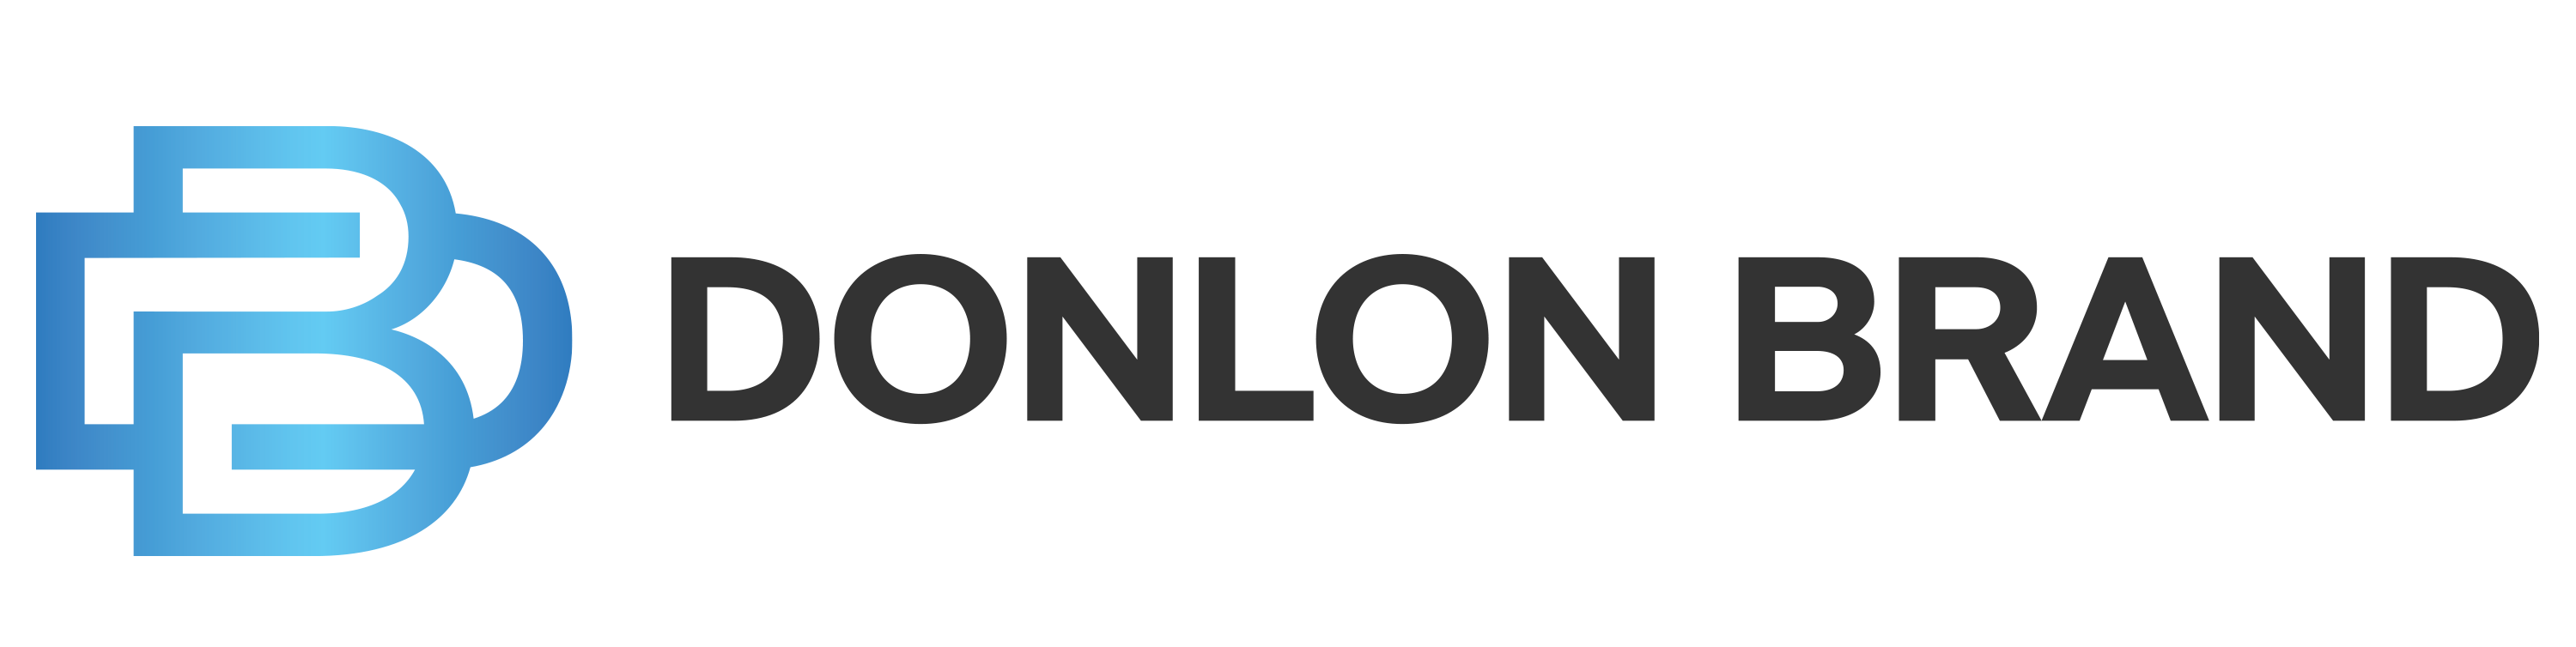 Donlon Brand LLC